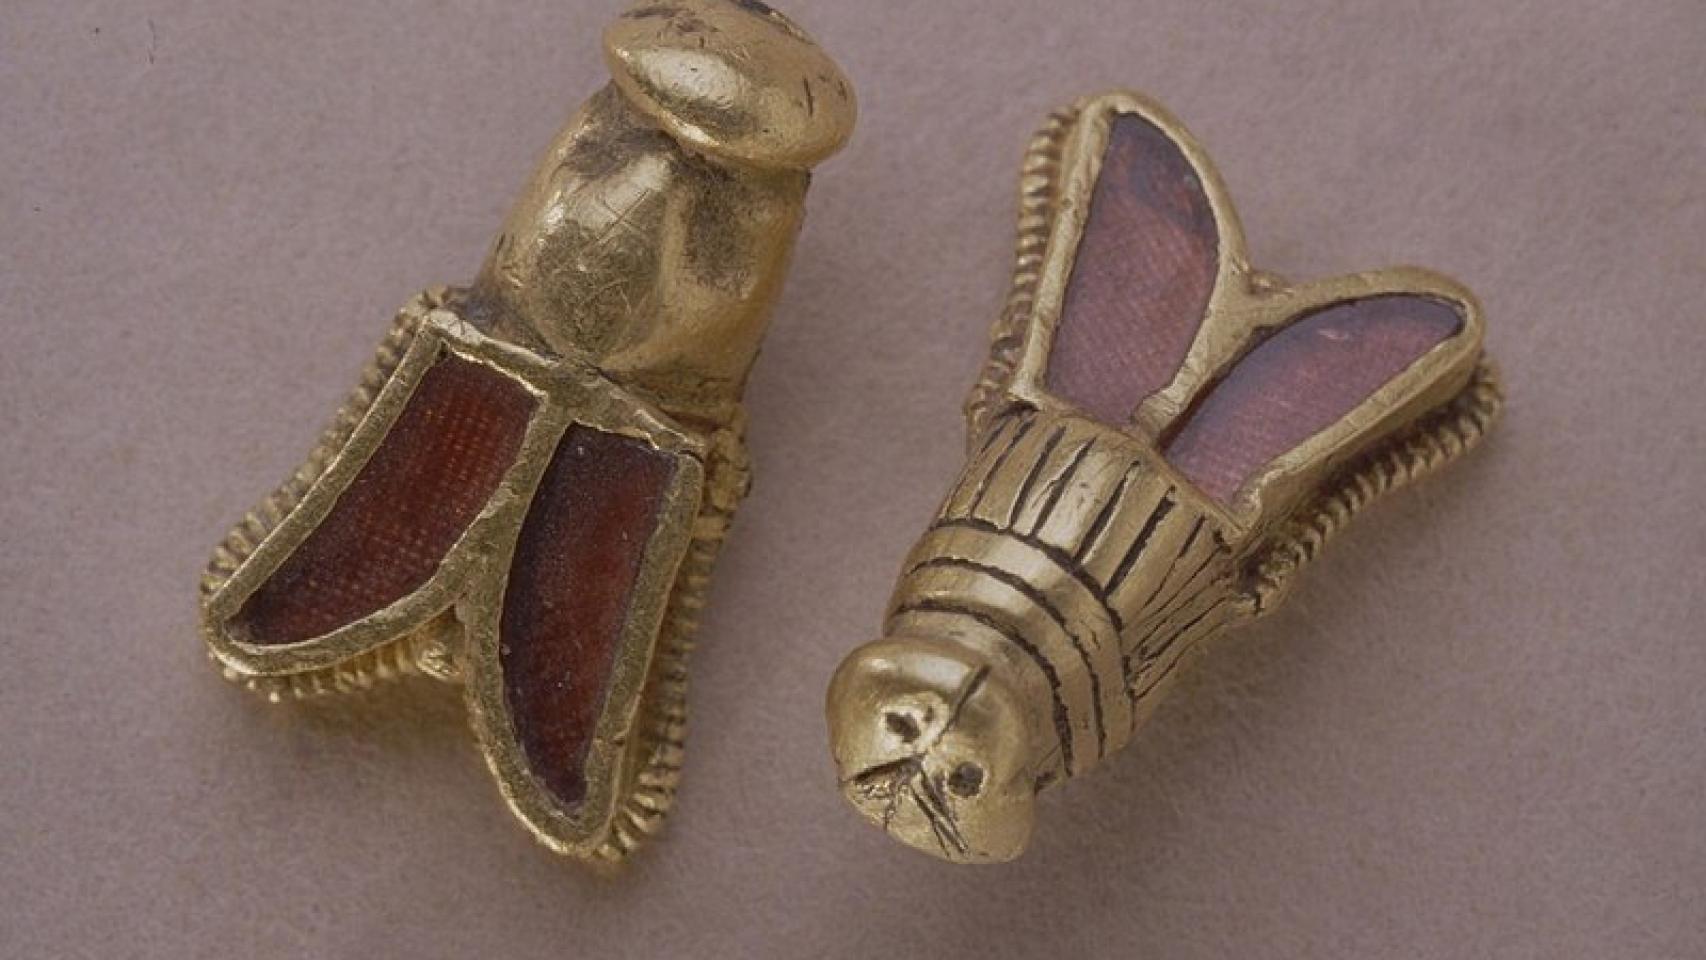 Abejas de oro que formaban parte del ajuar de Childerico.